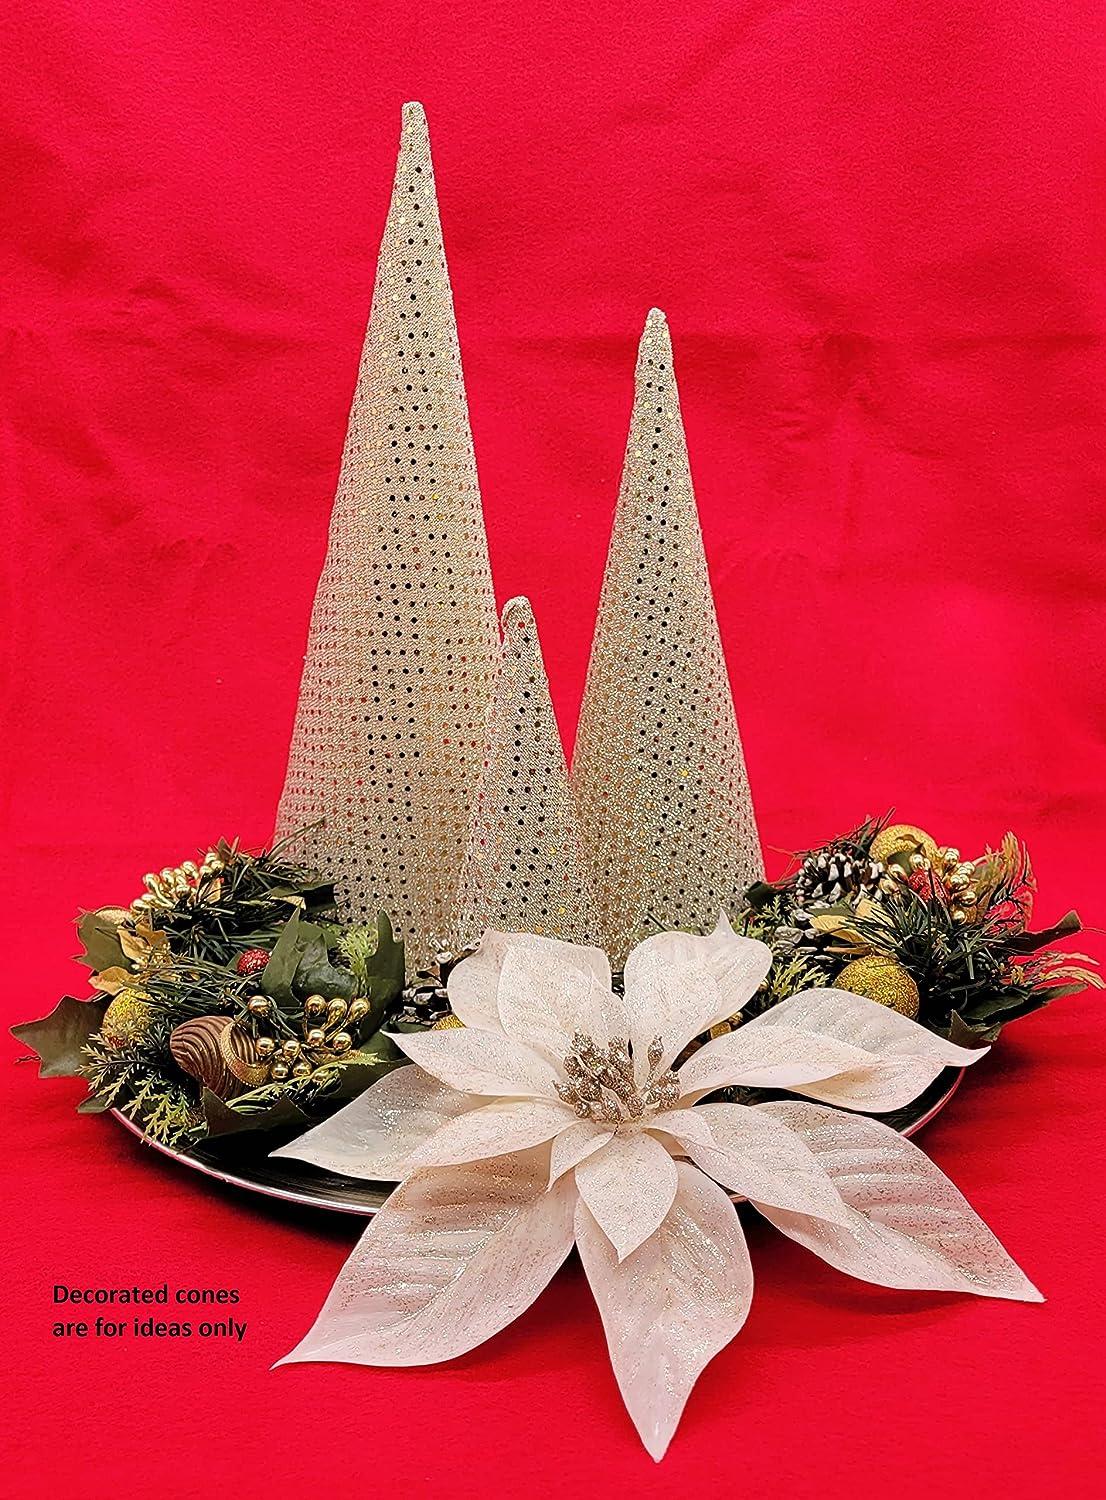 Paper Mache Cones, DARICE CRAFTS, 2873, - The Craft Shop, Inc.